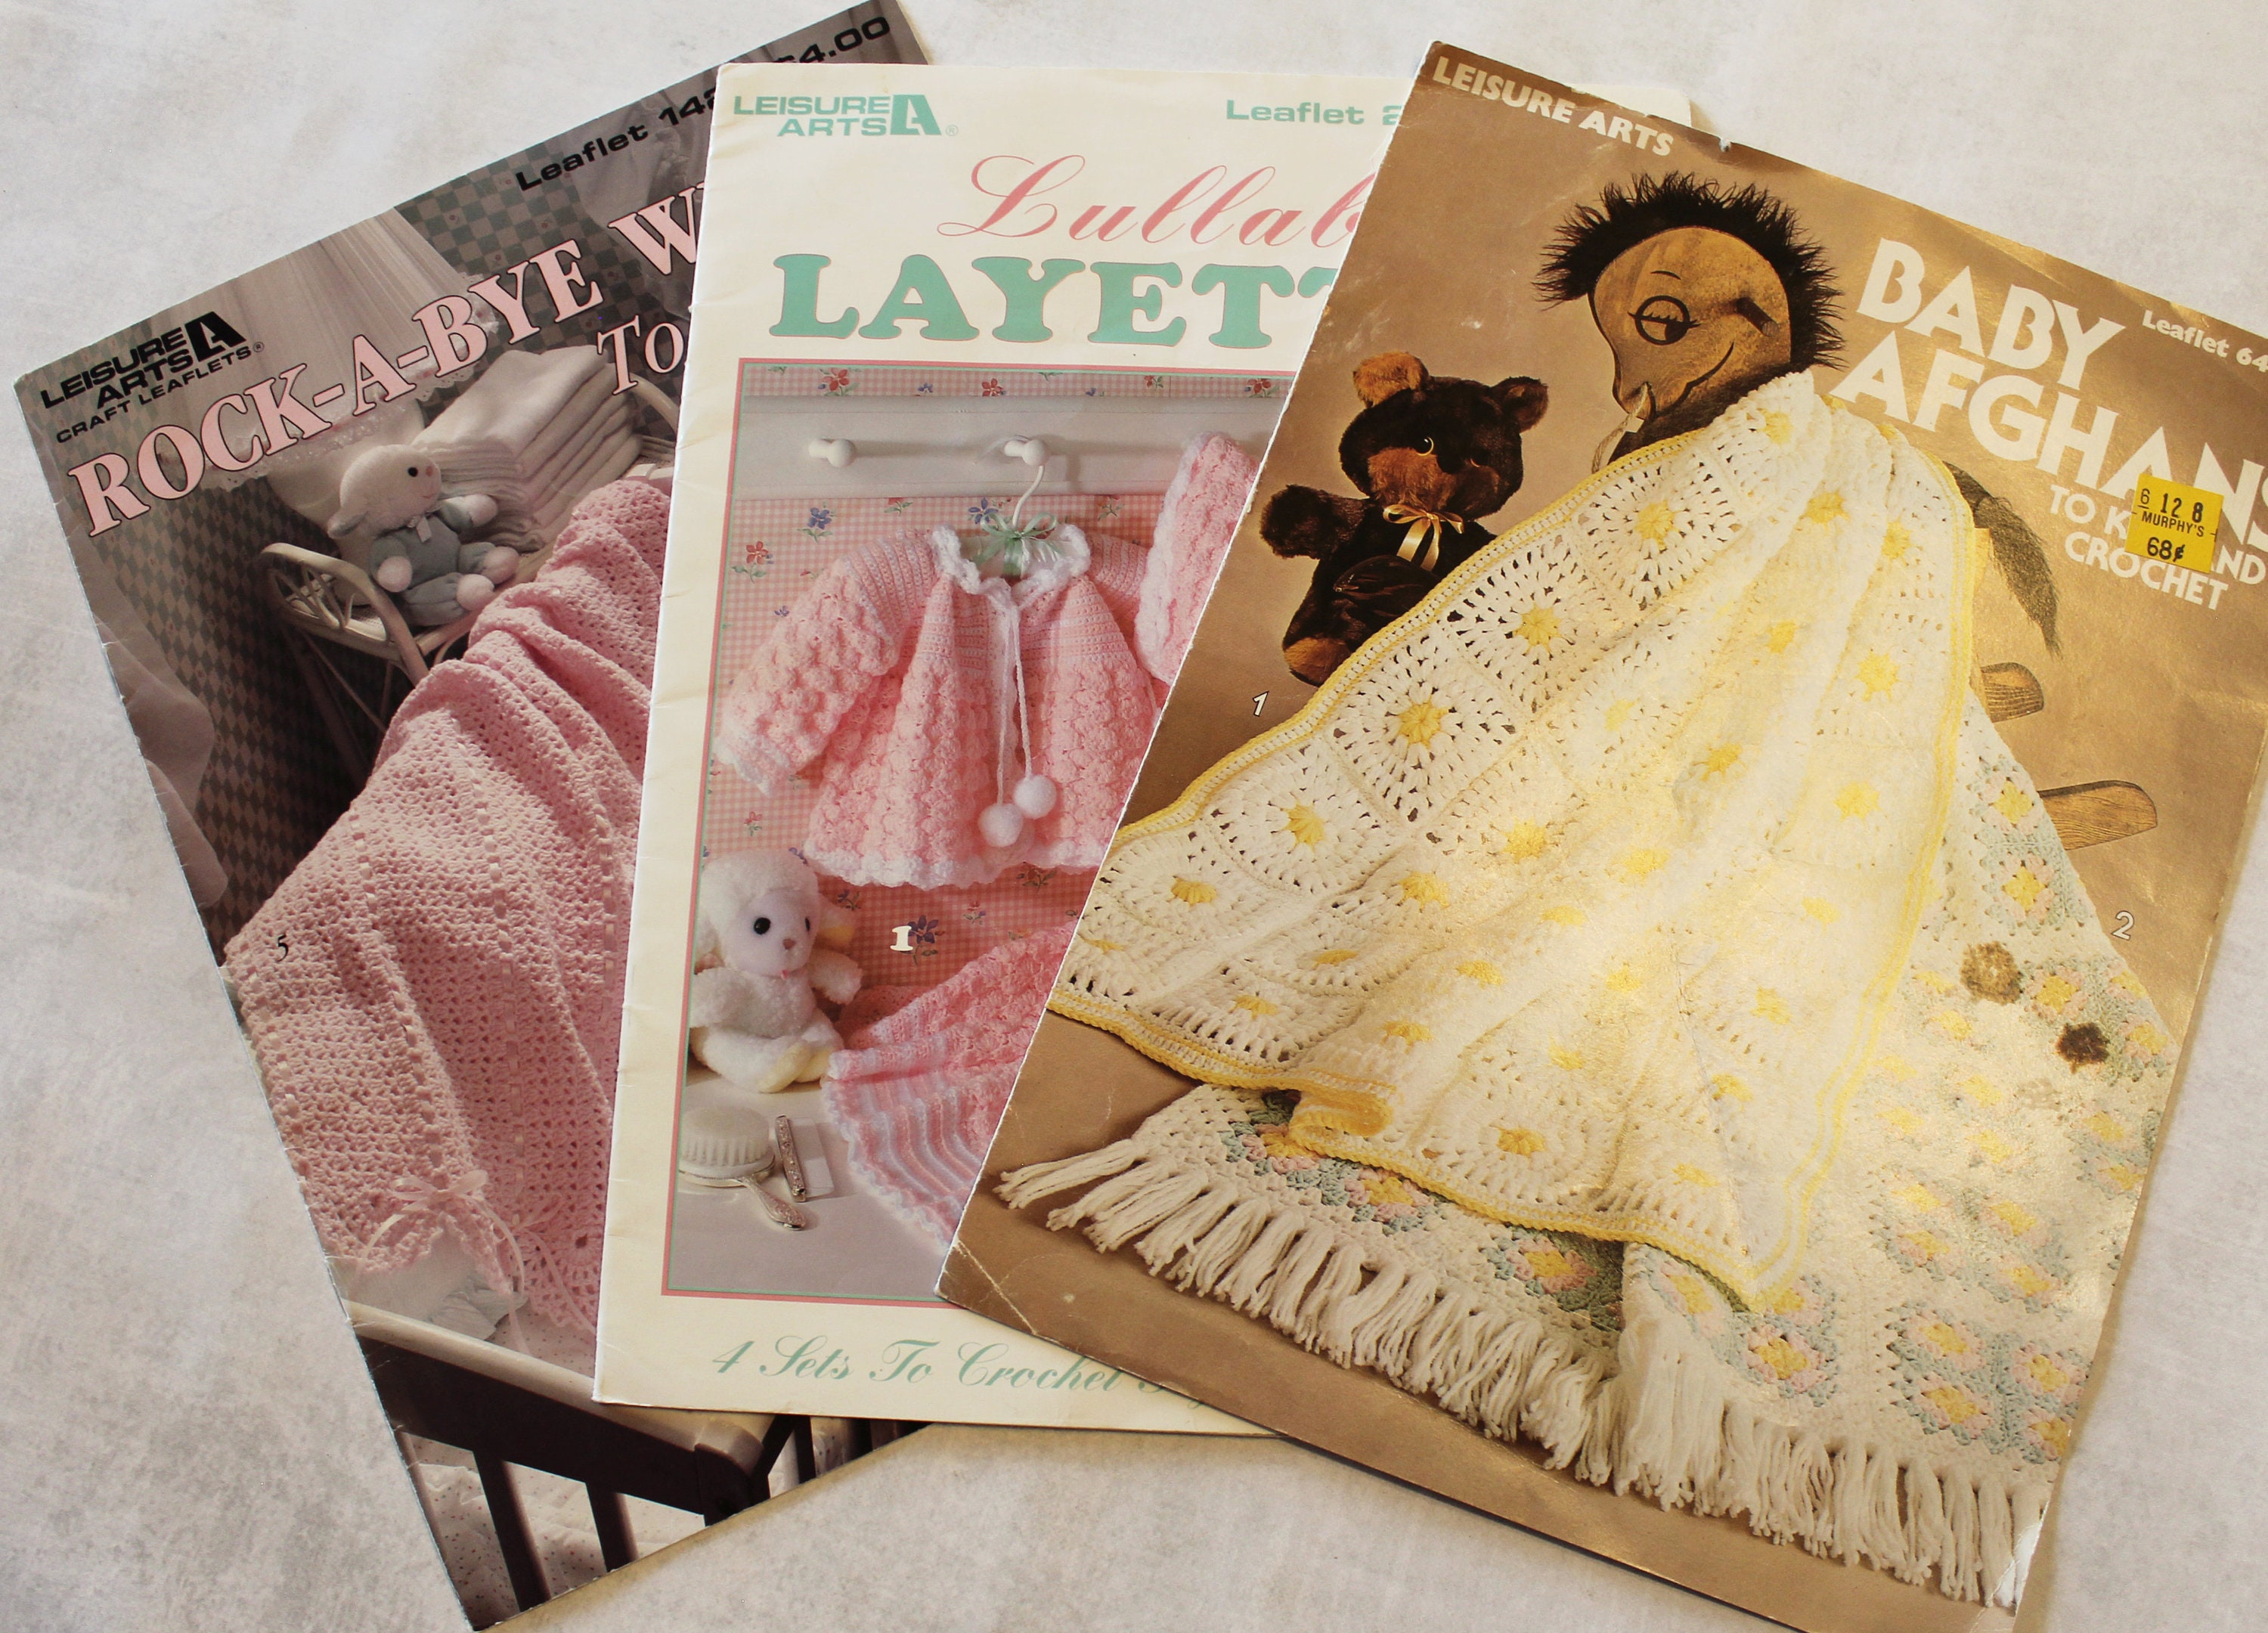 10 crochet Afghan book patterns sampler classic leaflets instruction  Leisure Art